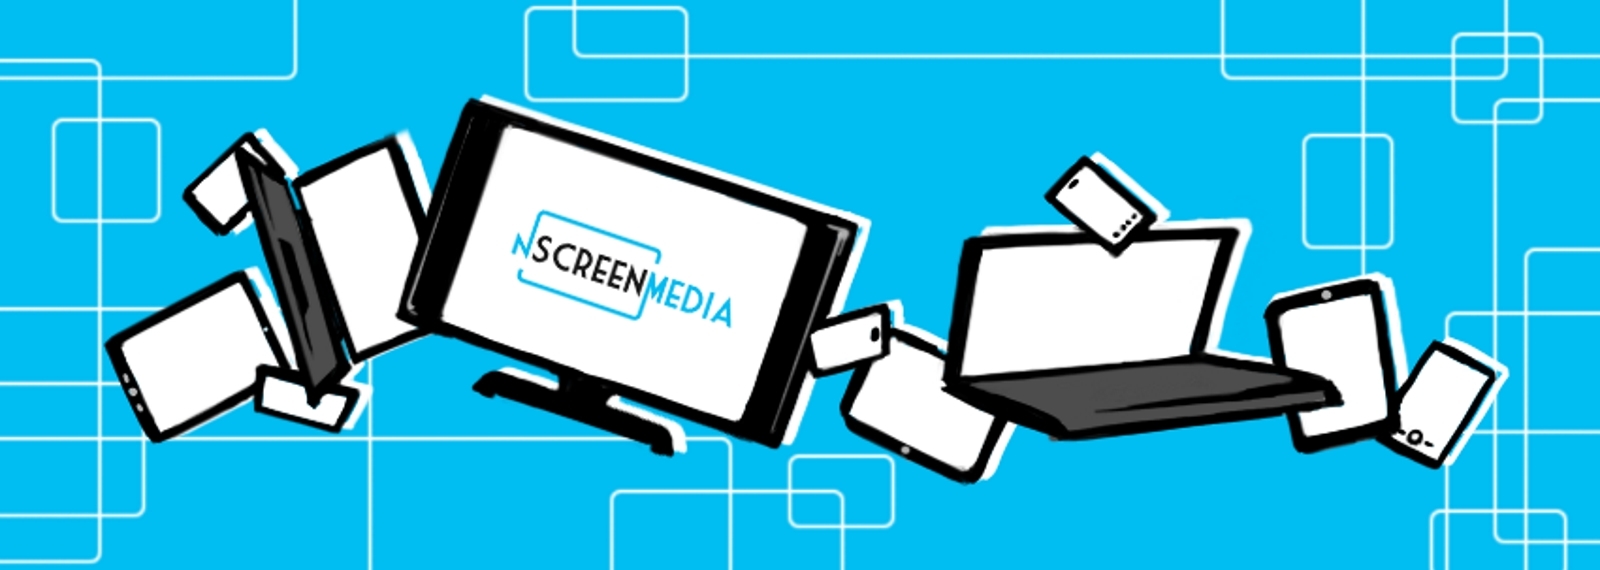 nScreenMedia